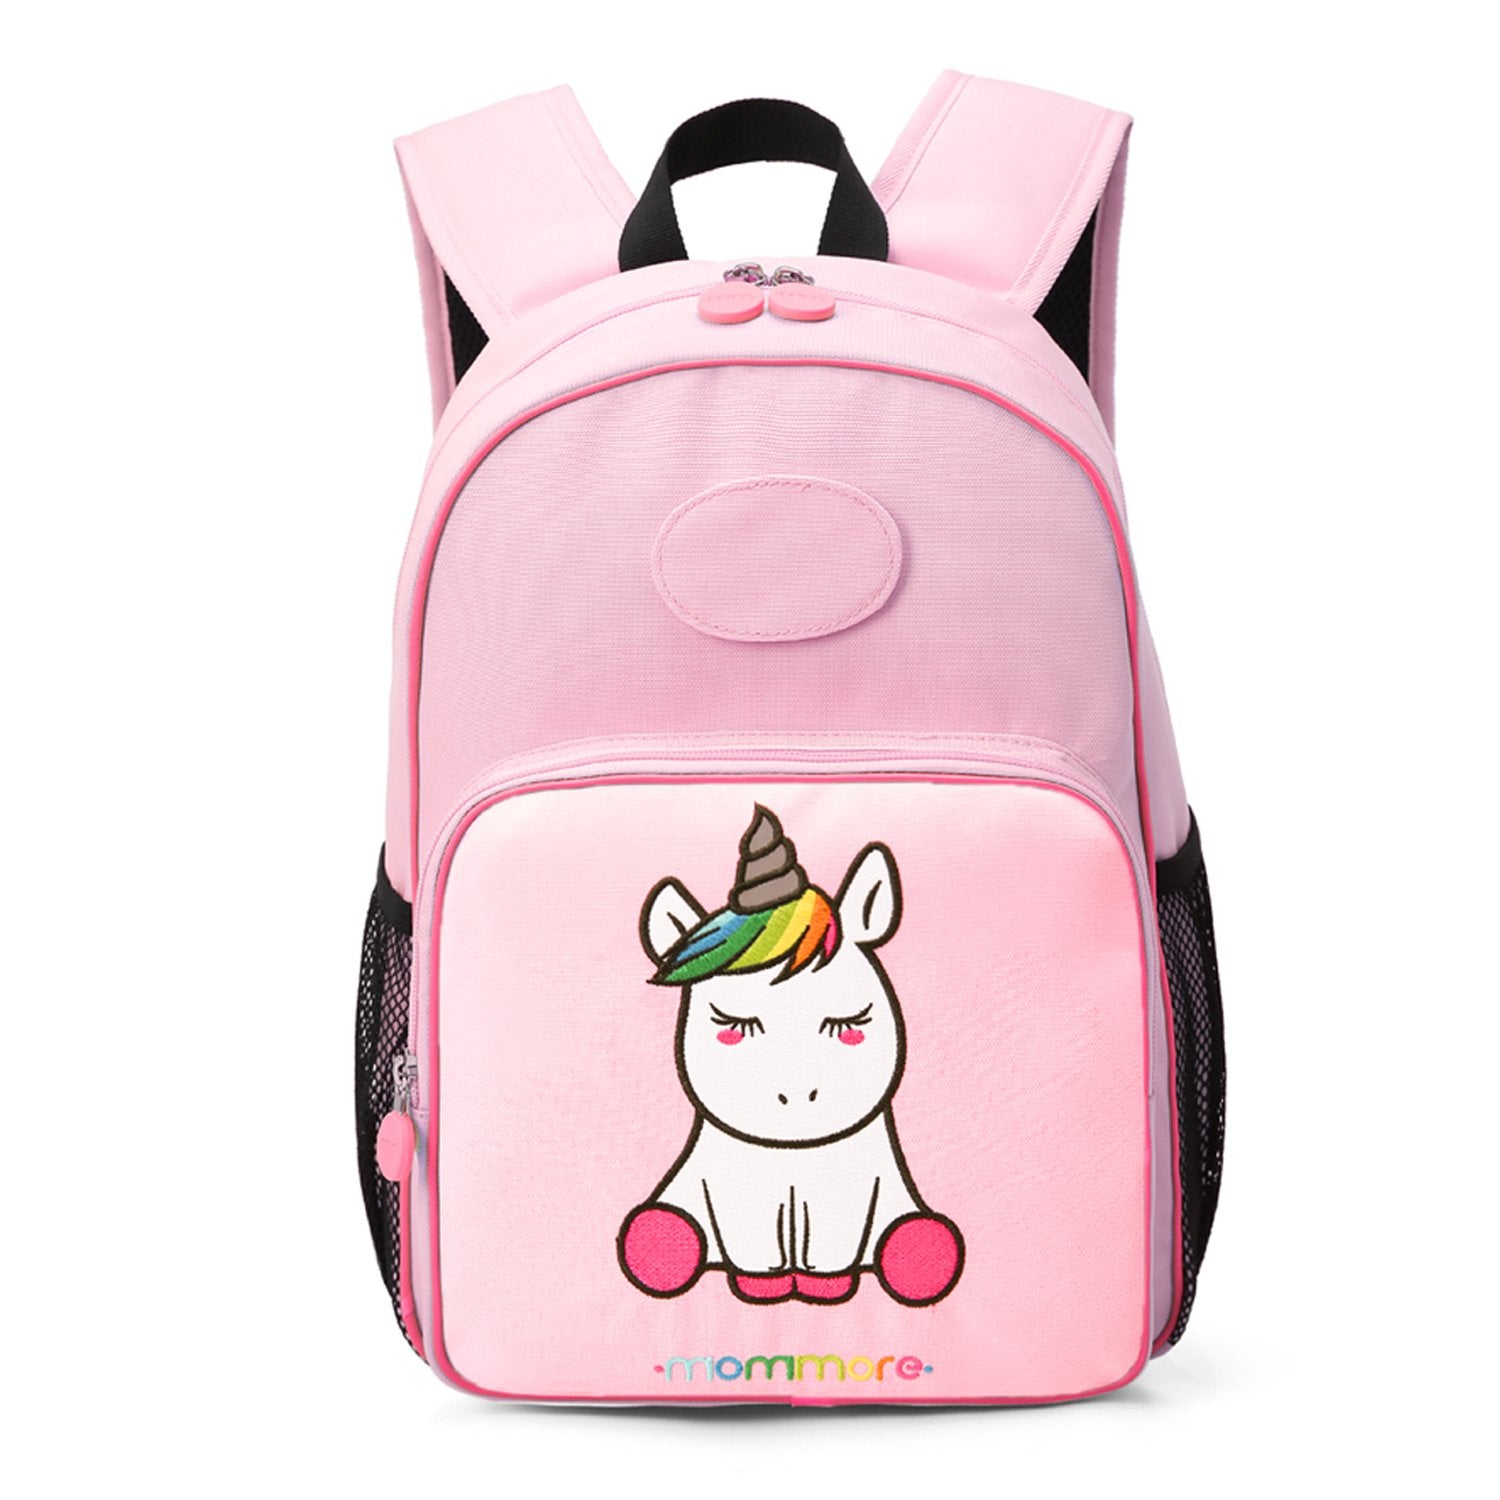  Unicorn  Kids Backpack  For Primary School  Preschool Bags 